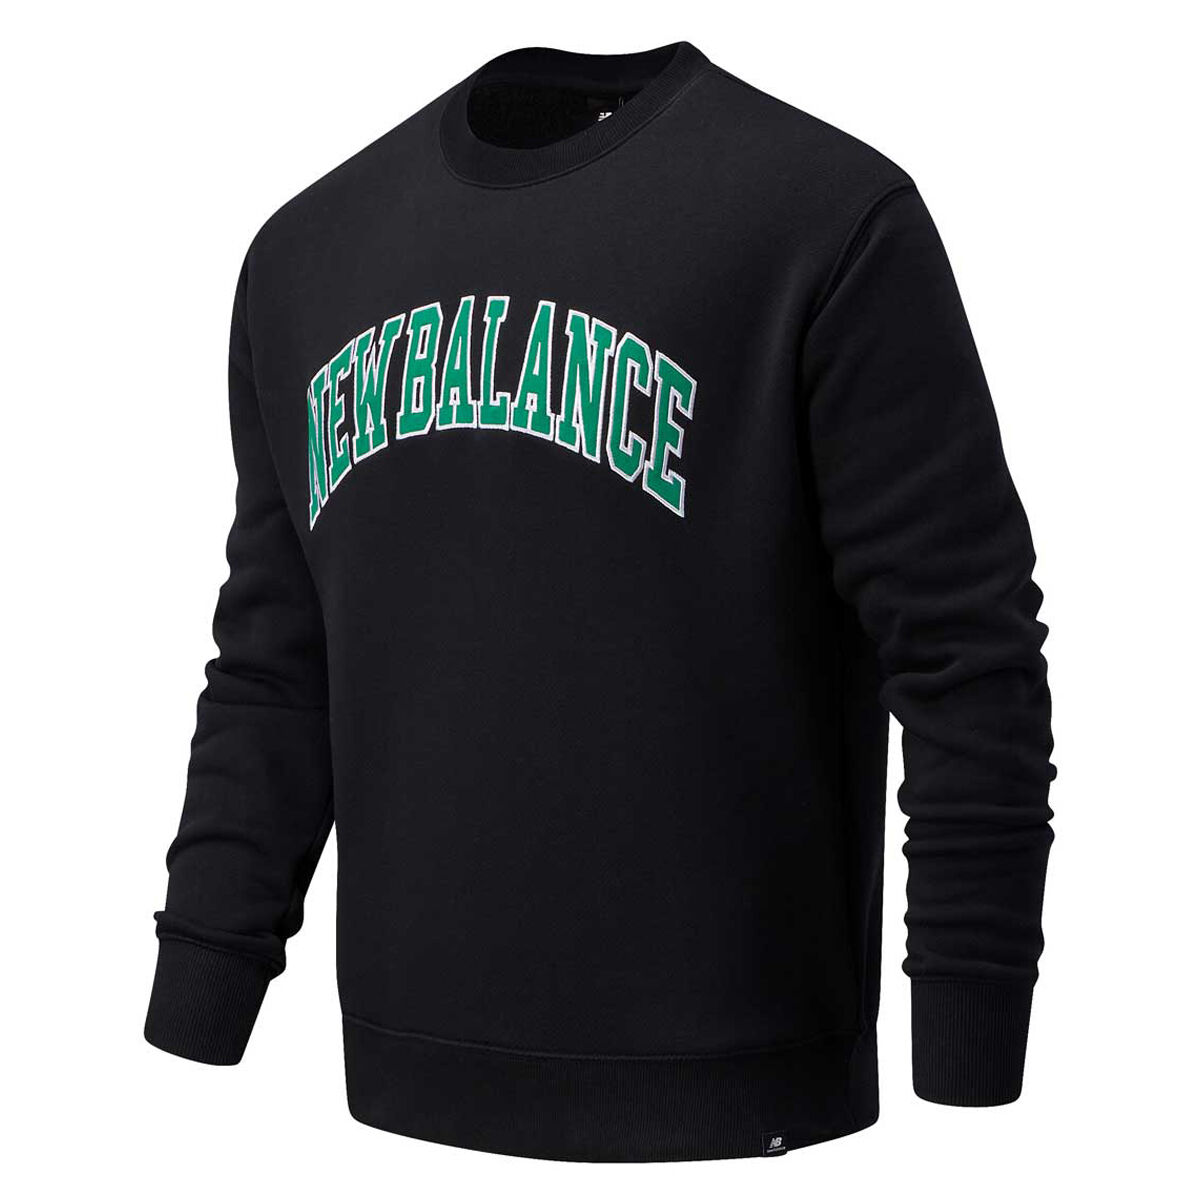 new balance varsity hoodie